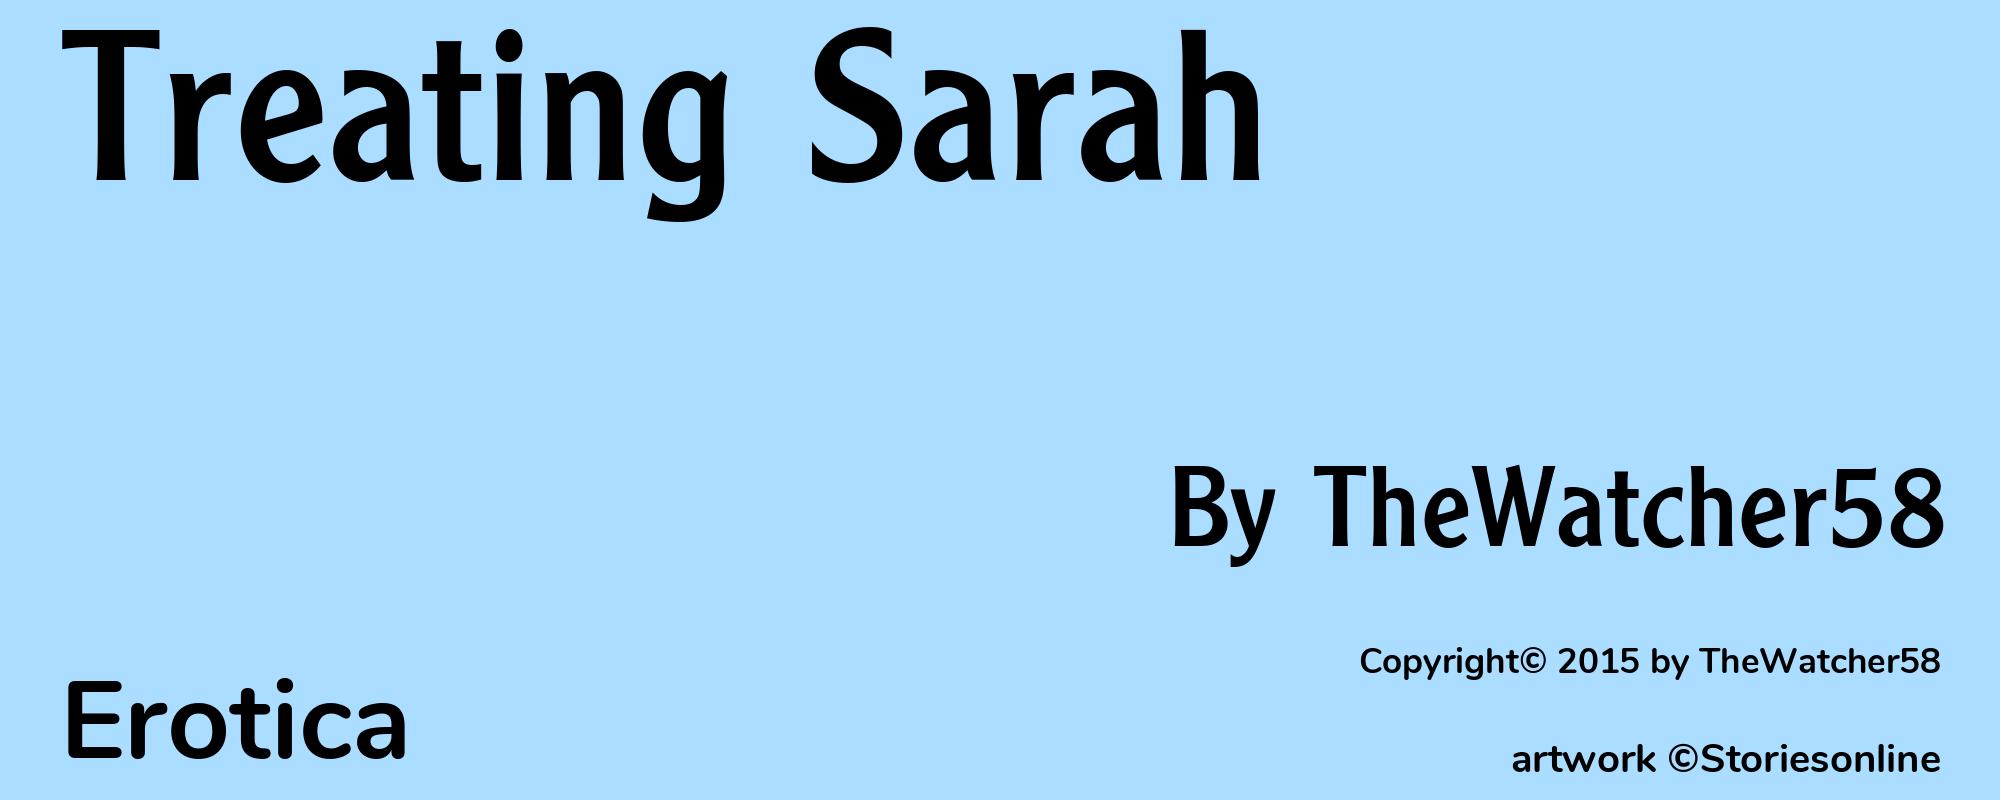 Treating Sarah - Cover